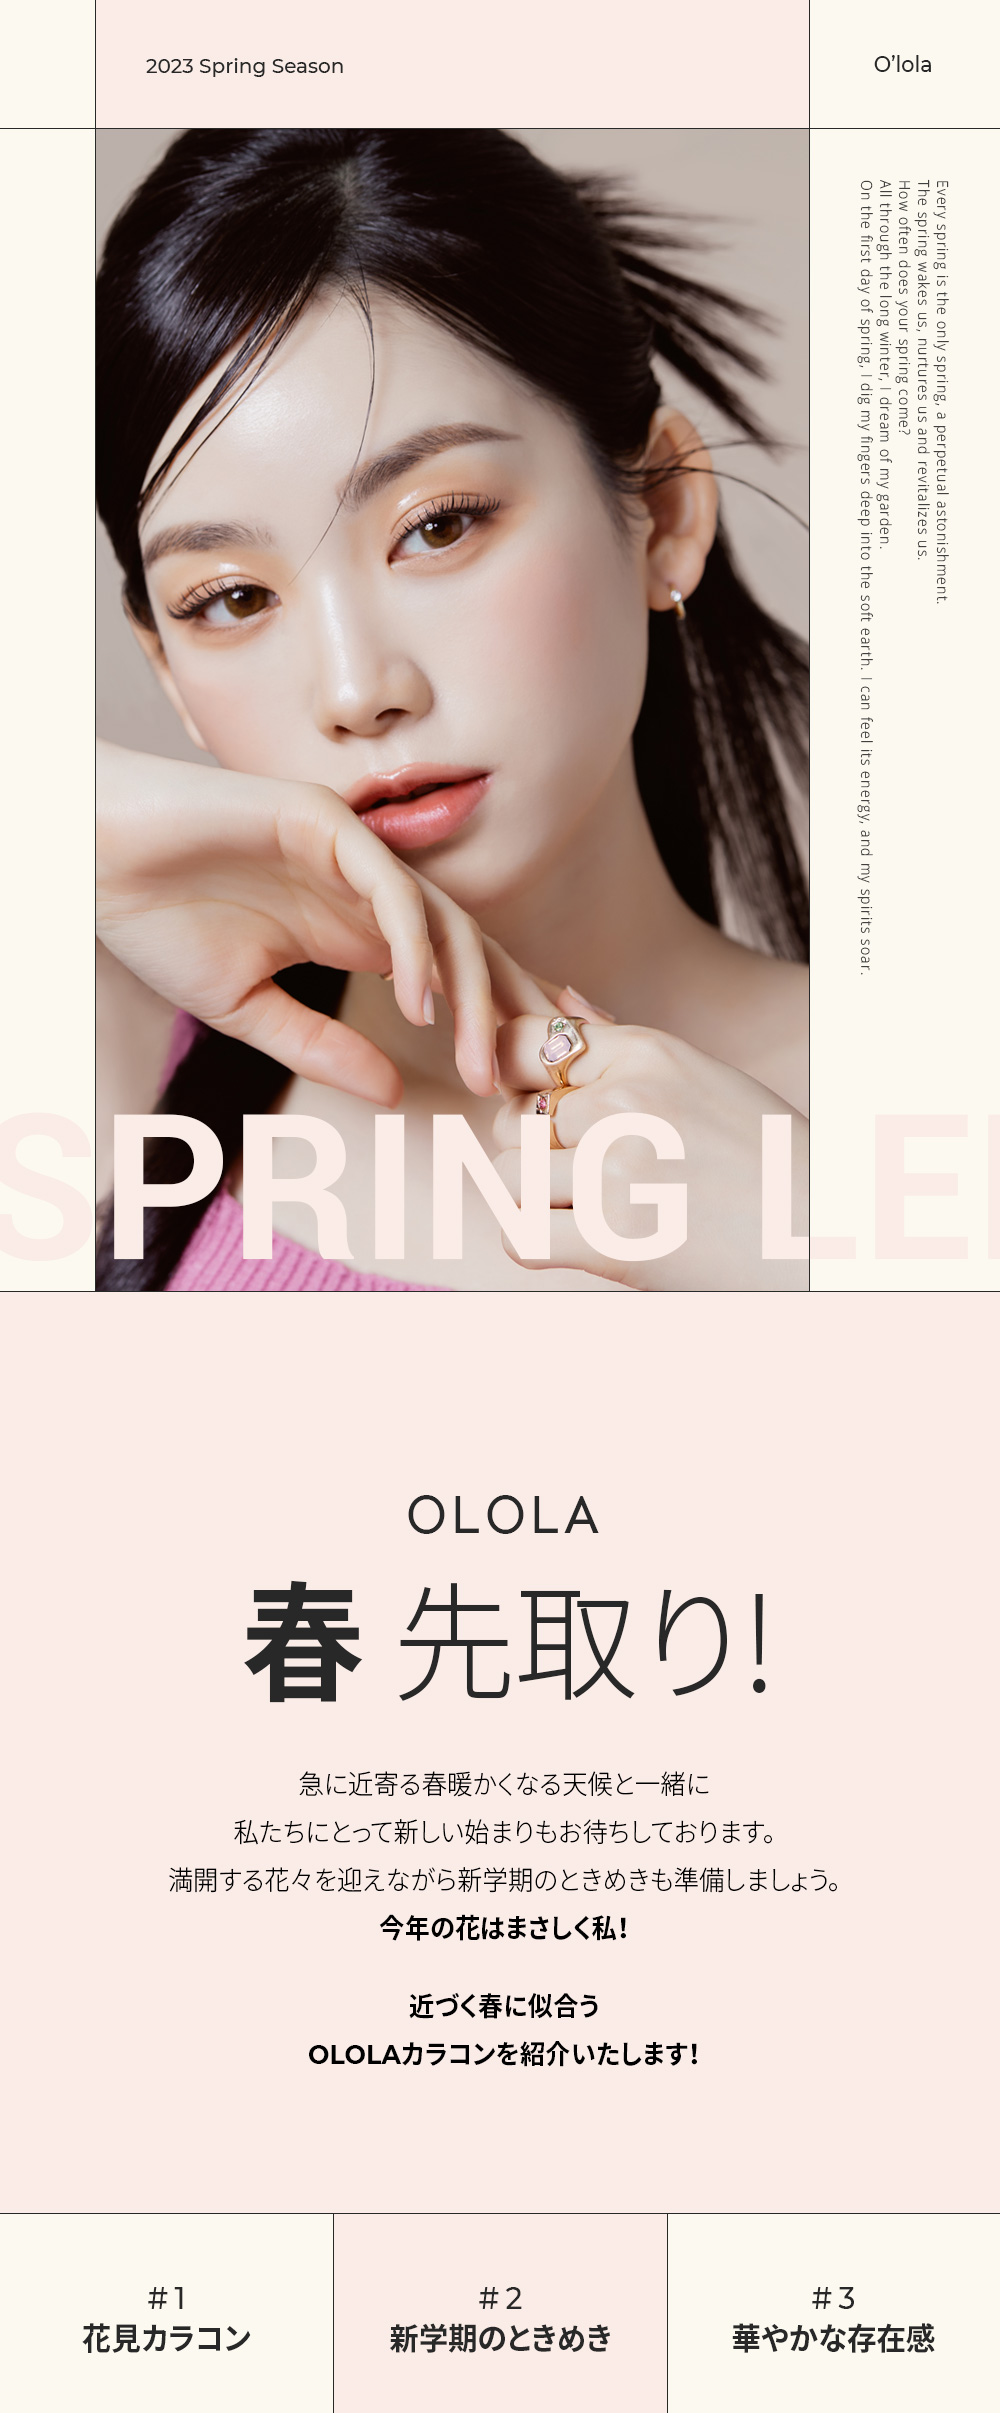 2023 spring olola lens sale